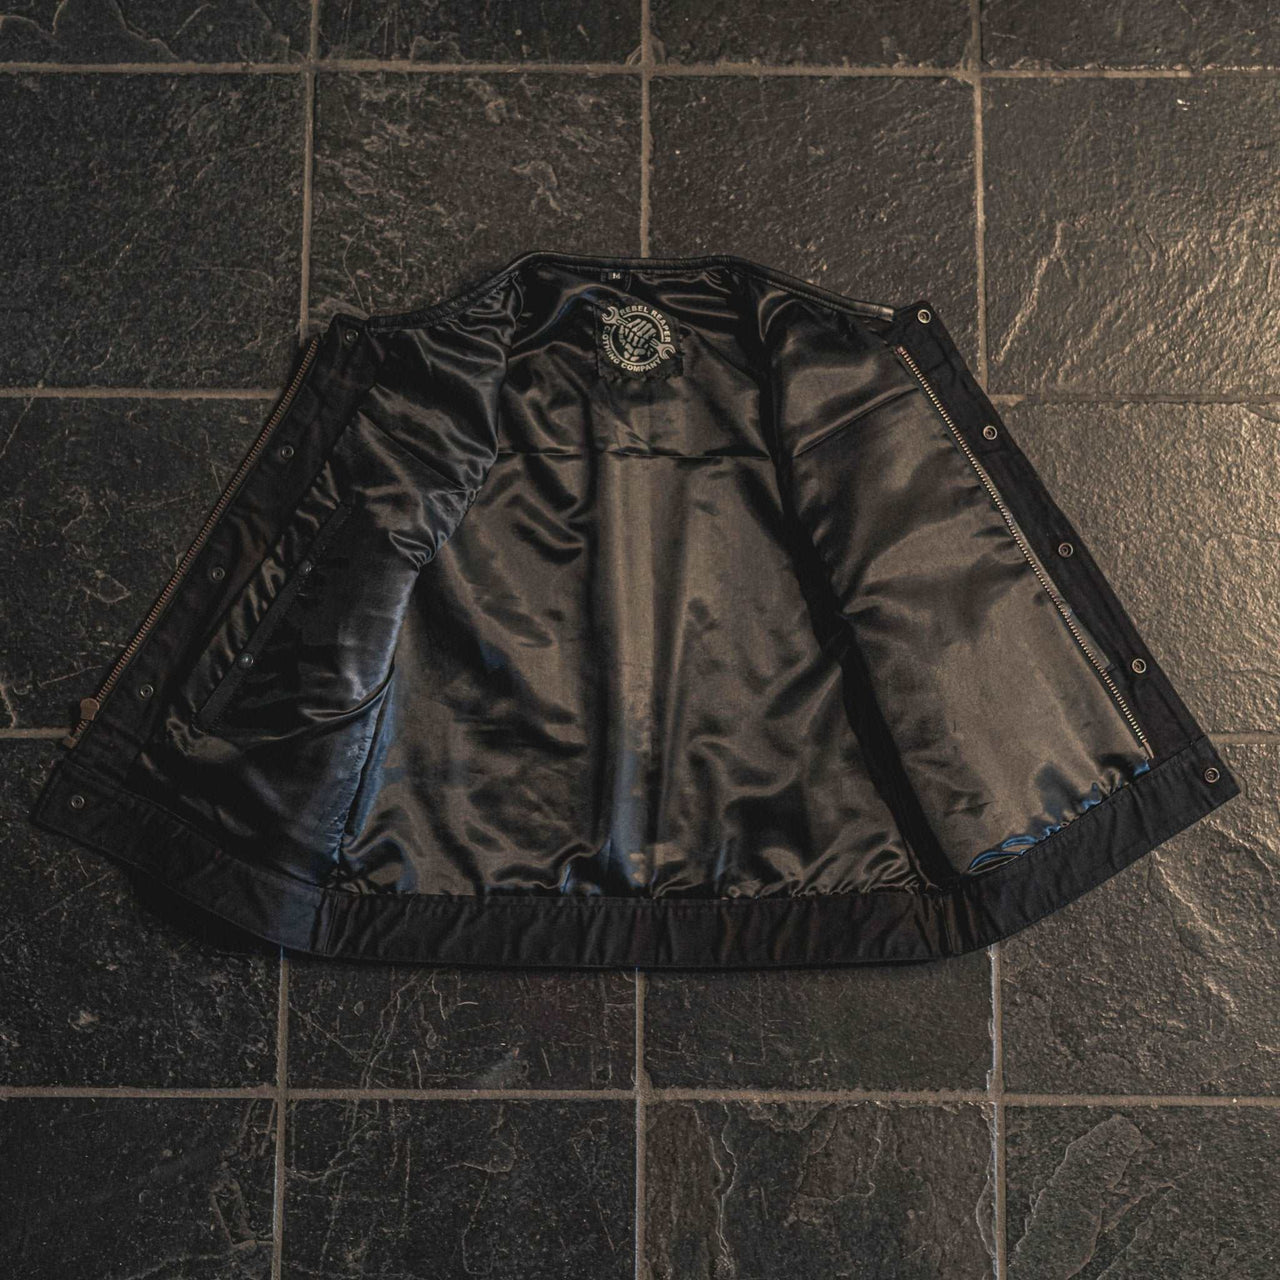 East-wood Collarless Black Leather Mens Vest